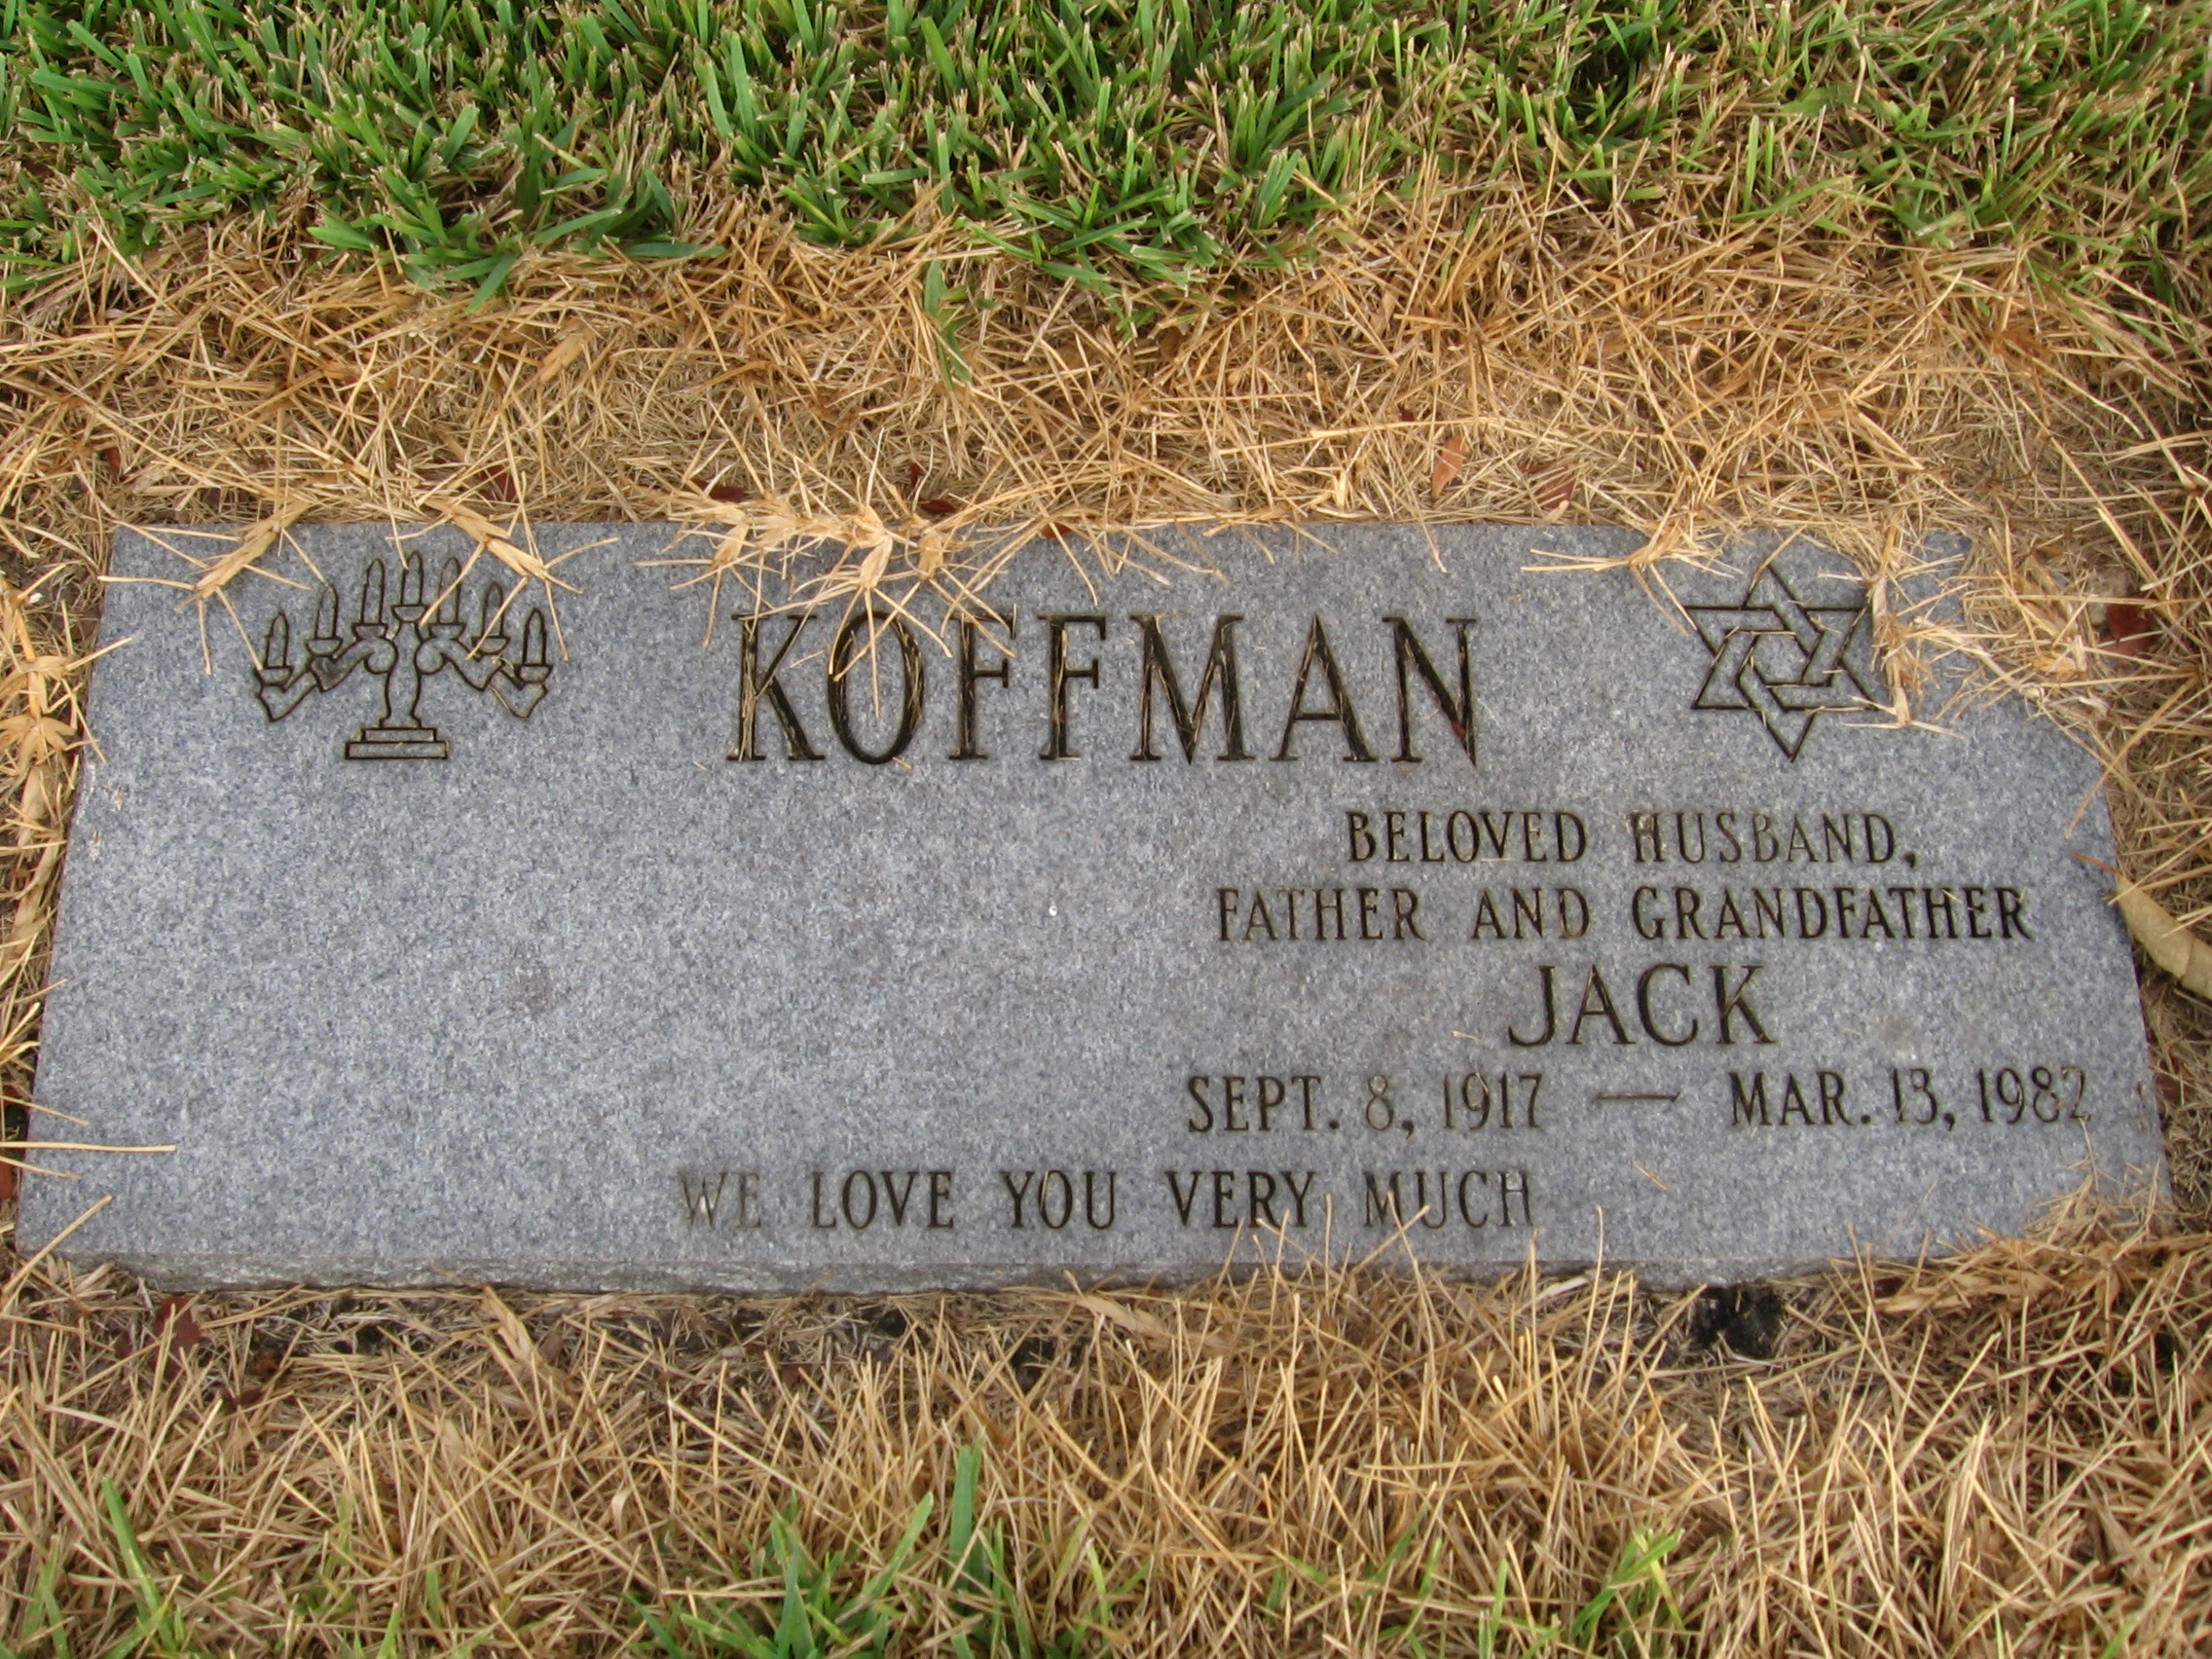 Jack Koffman